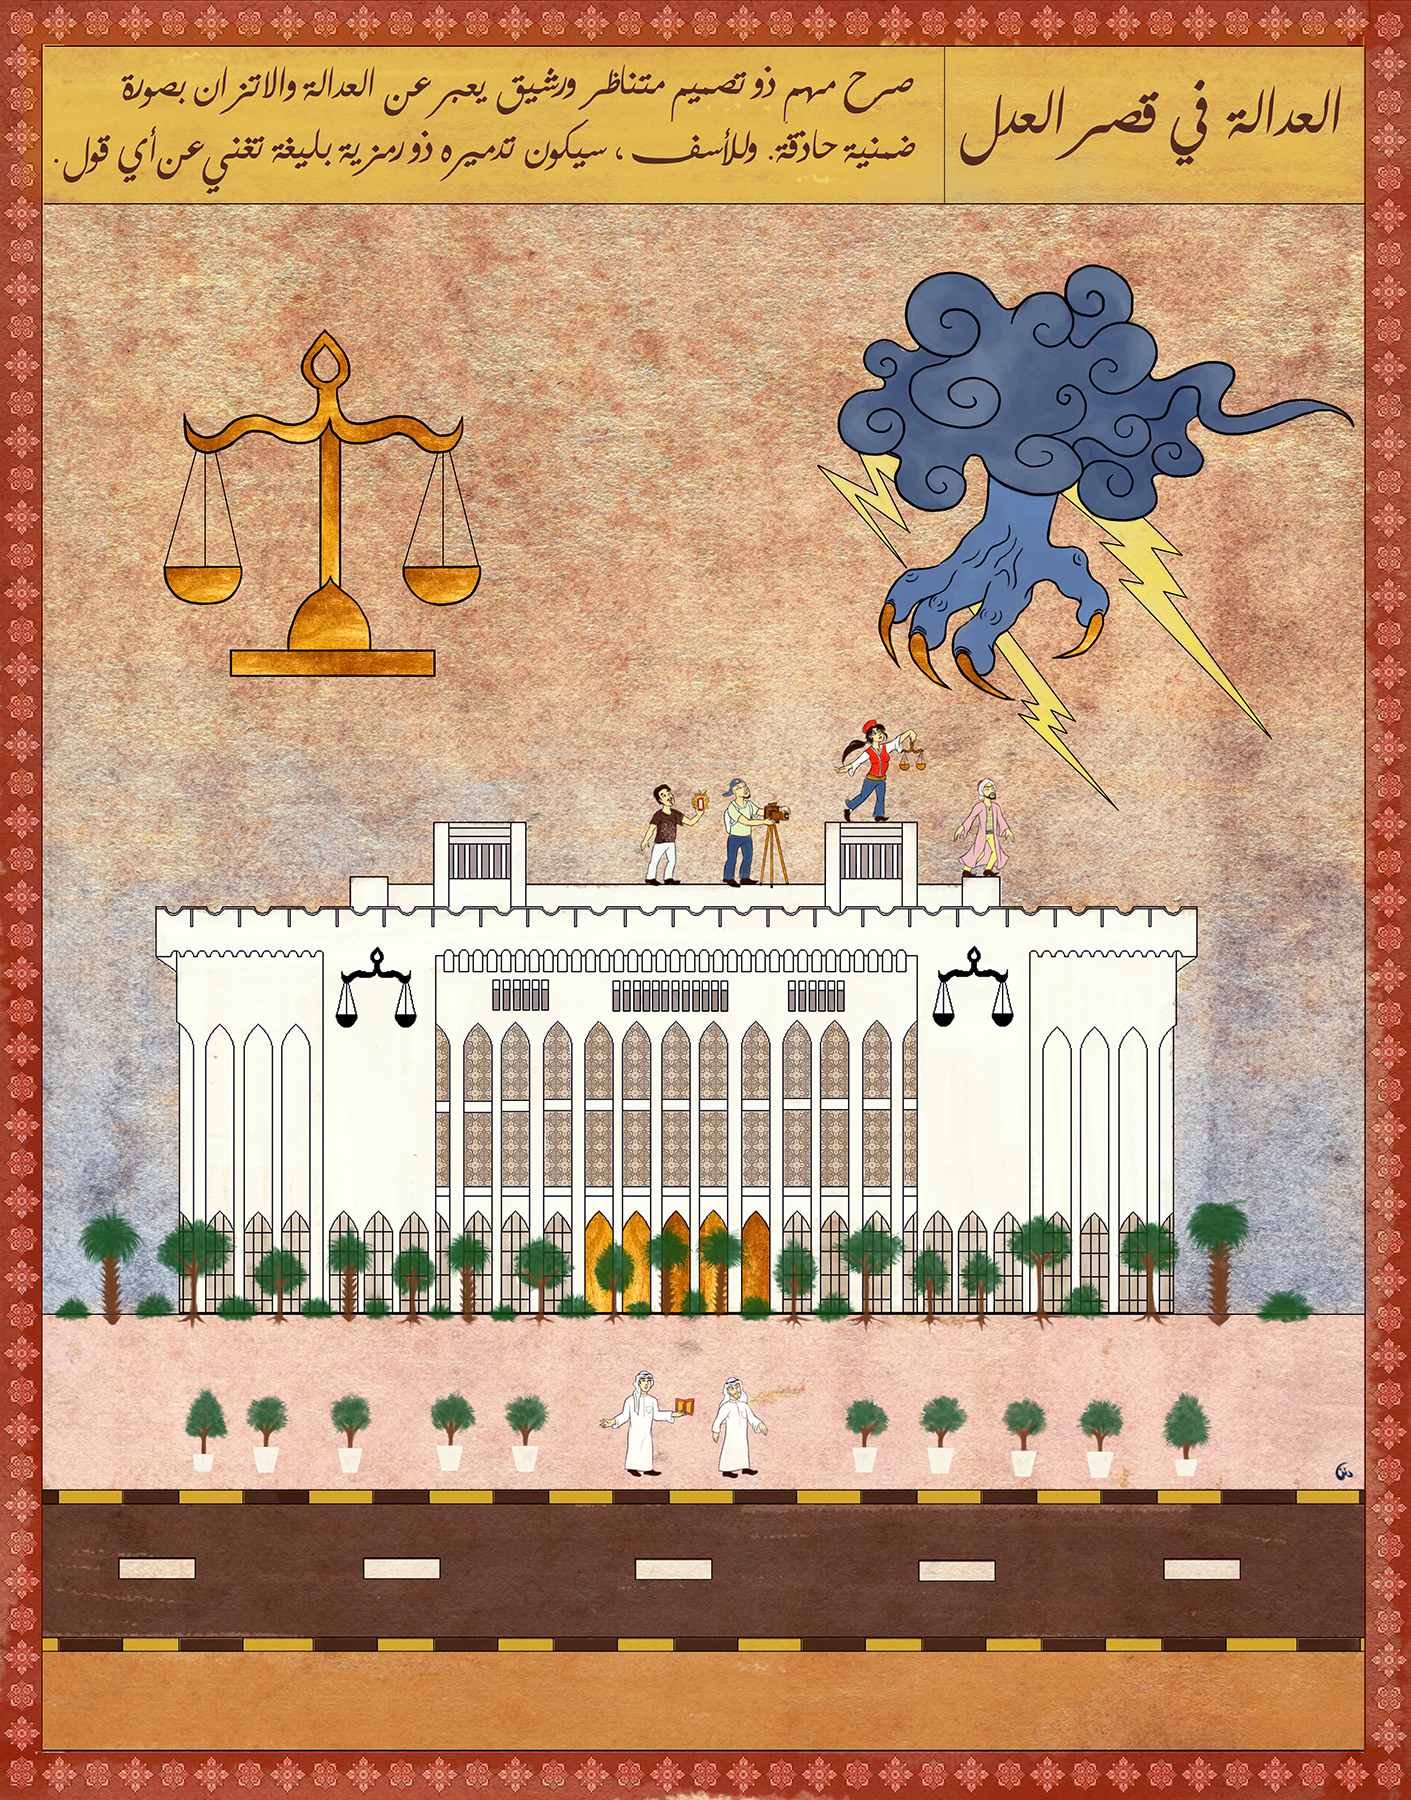 Justice at the Justice Palace by Dana Al Rashid, Courtesy of the Khaleeji Art Museum